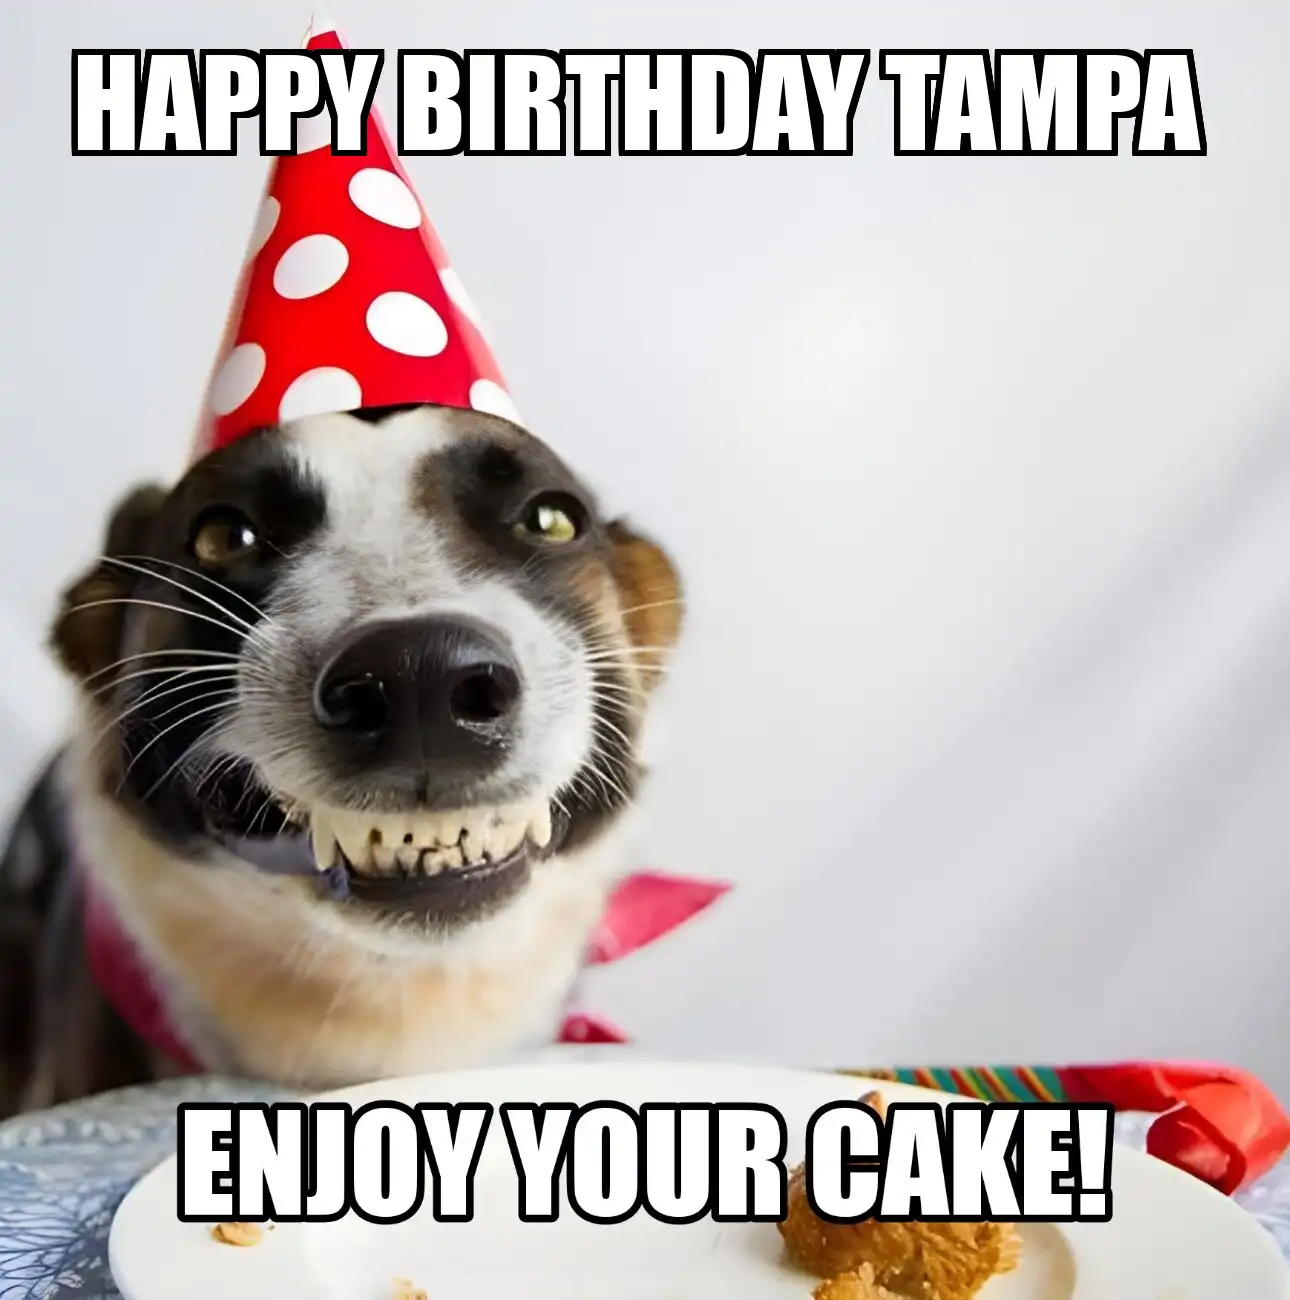 Happy Birthday Tampa Enjoy Your Cake Dog Meme